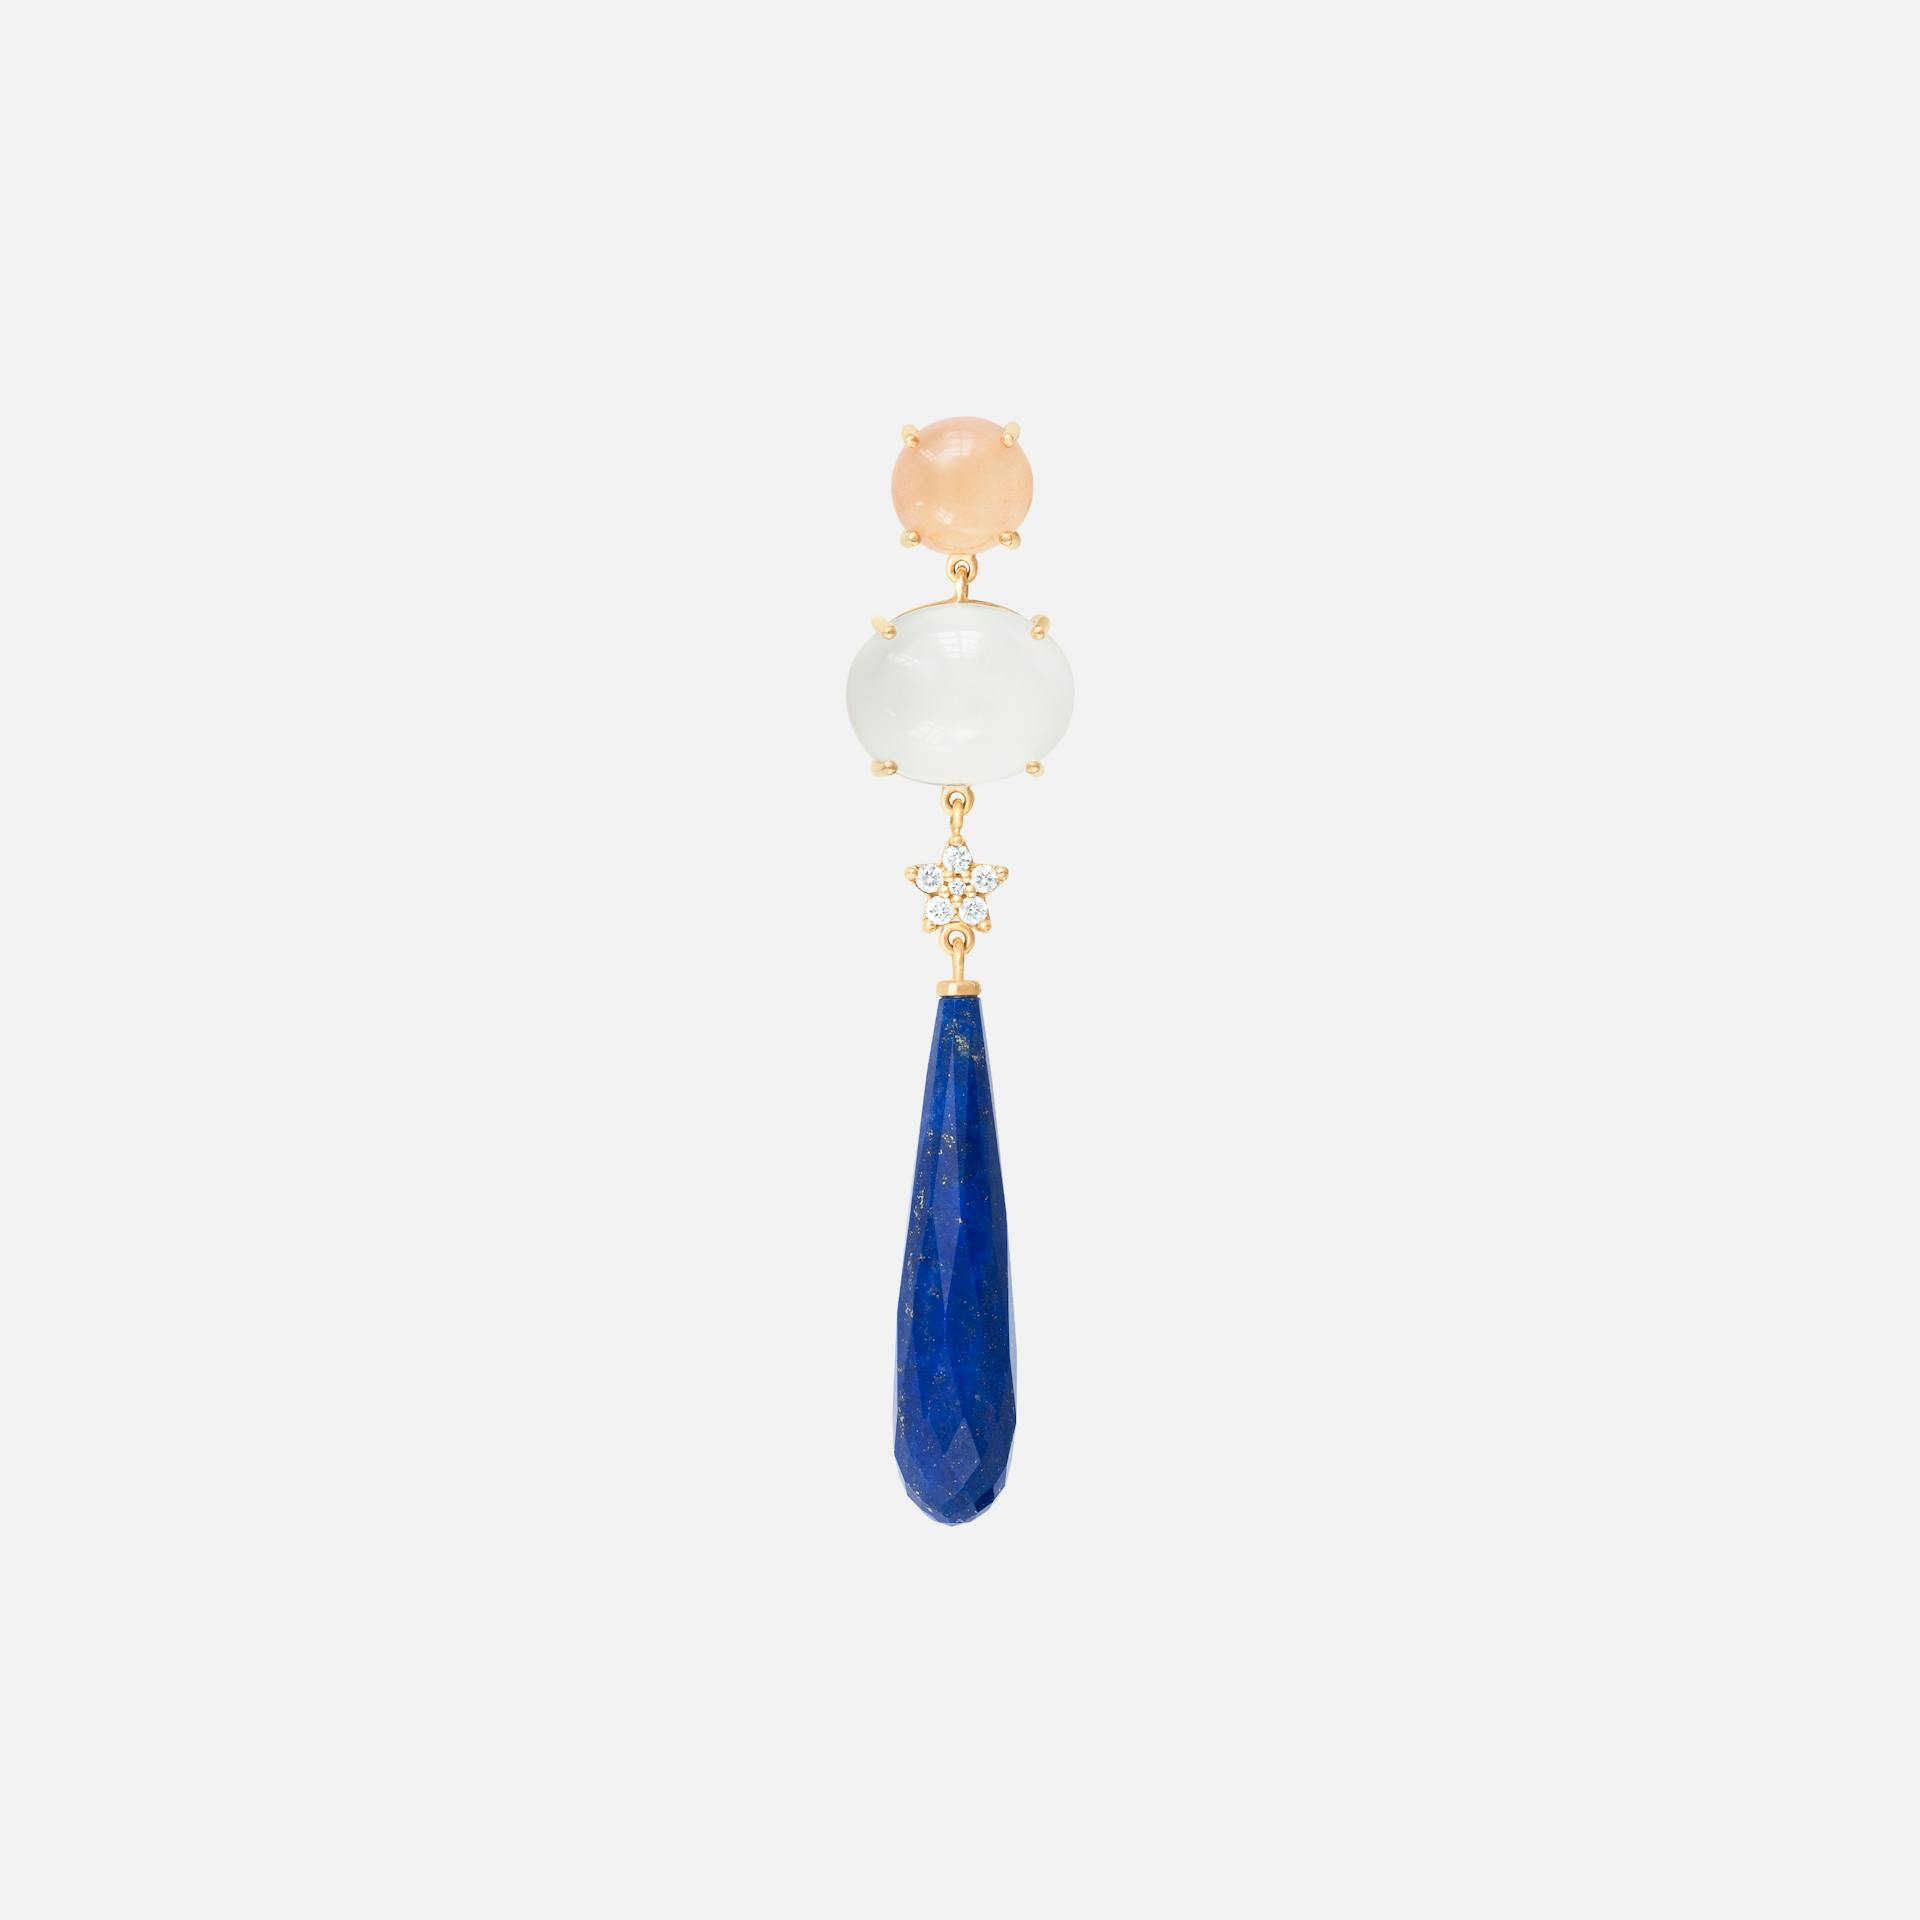 Lotus Earrings in Gold with Diamonds, Moonstone & Lapis Lazuli  |  Ole Lynggaard Copenhagen